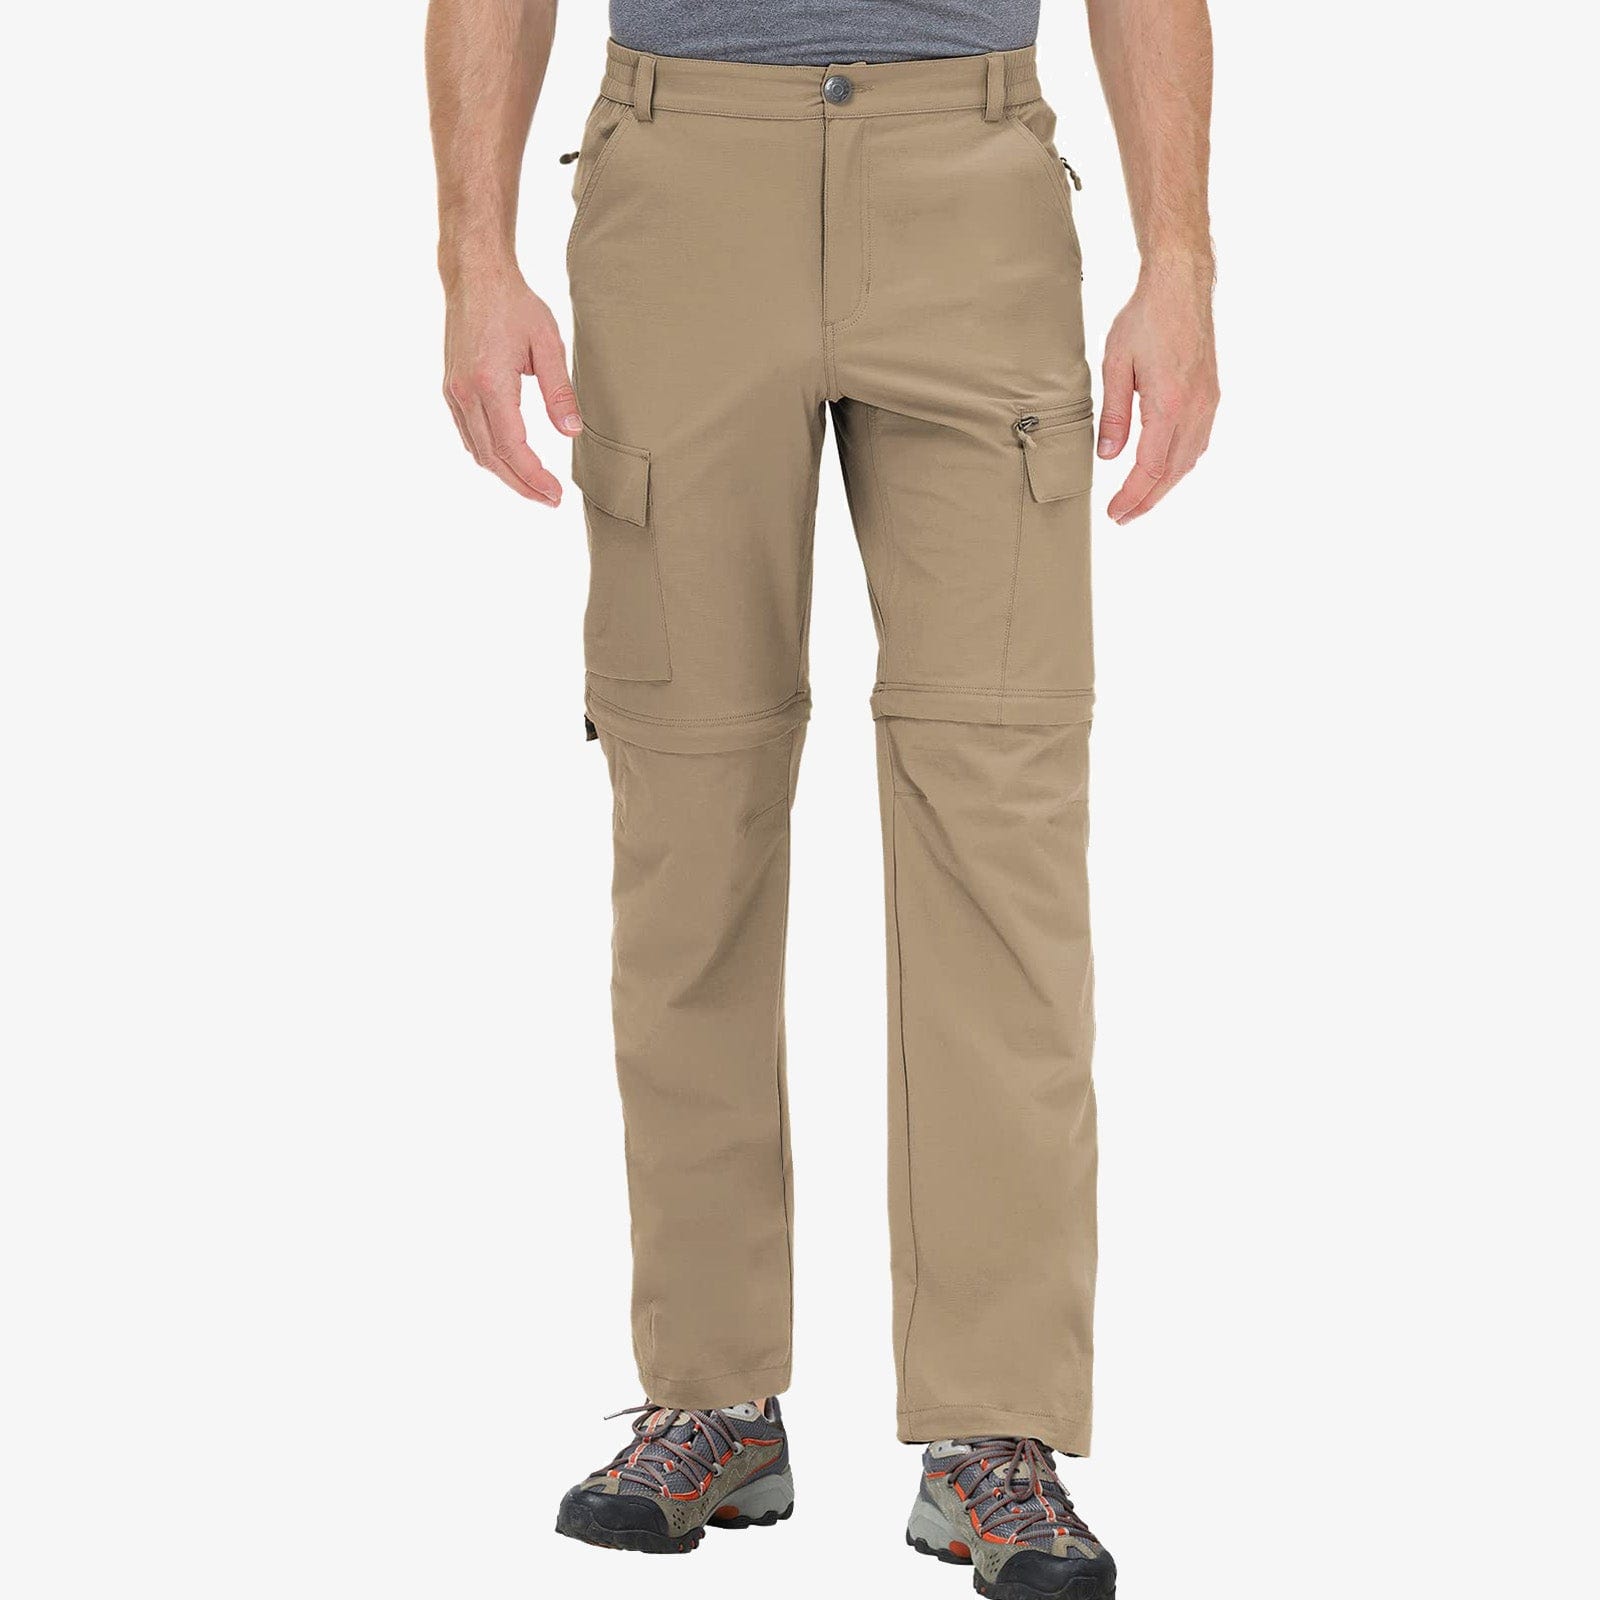 Mier Men's Convertible Hiking Pants Zip Off Quick Dry Cargo Pants, Khaki / 32